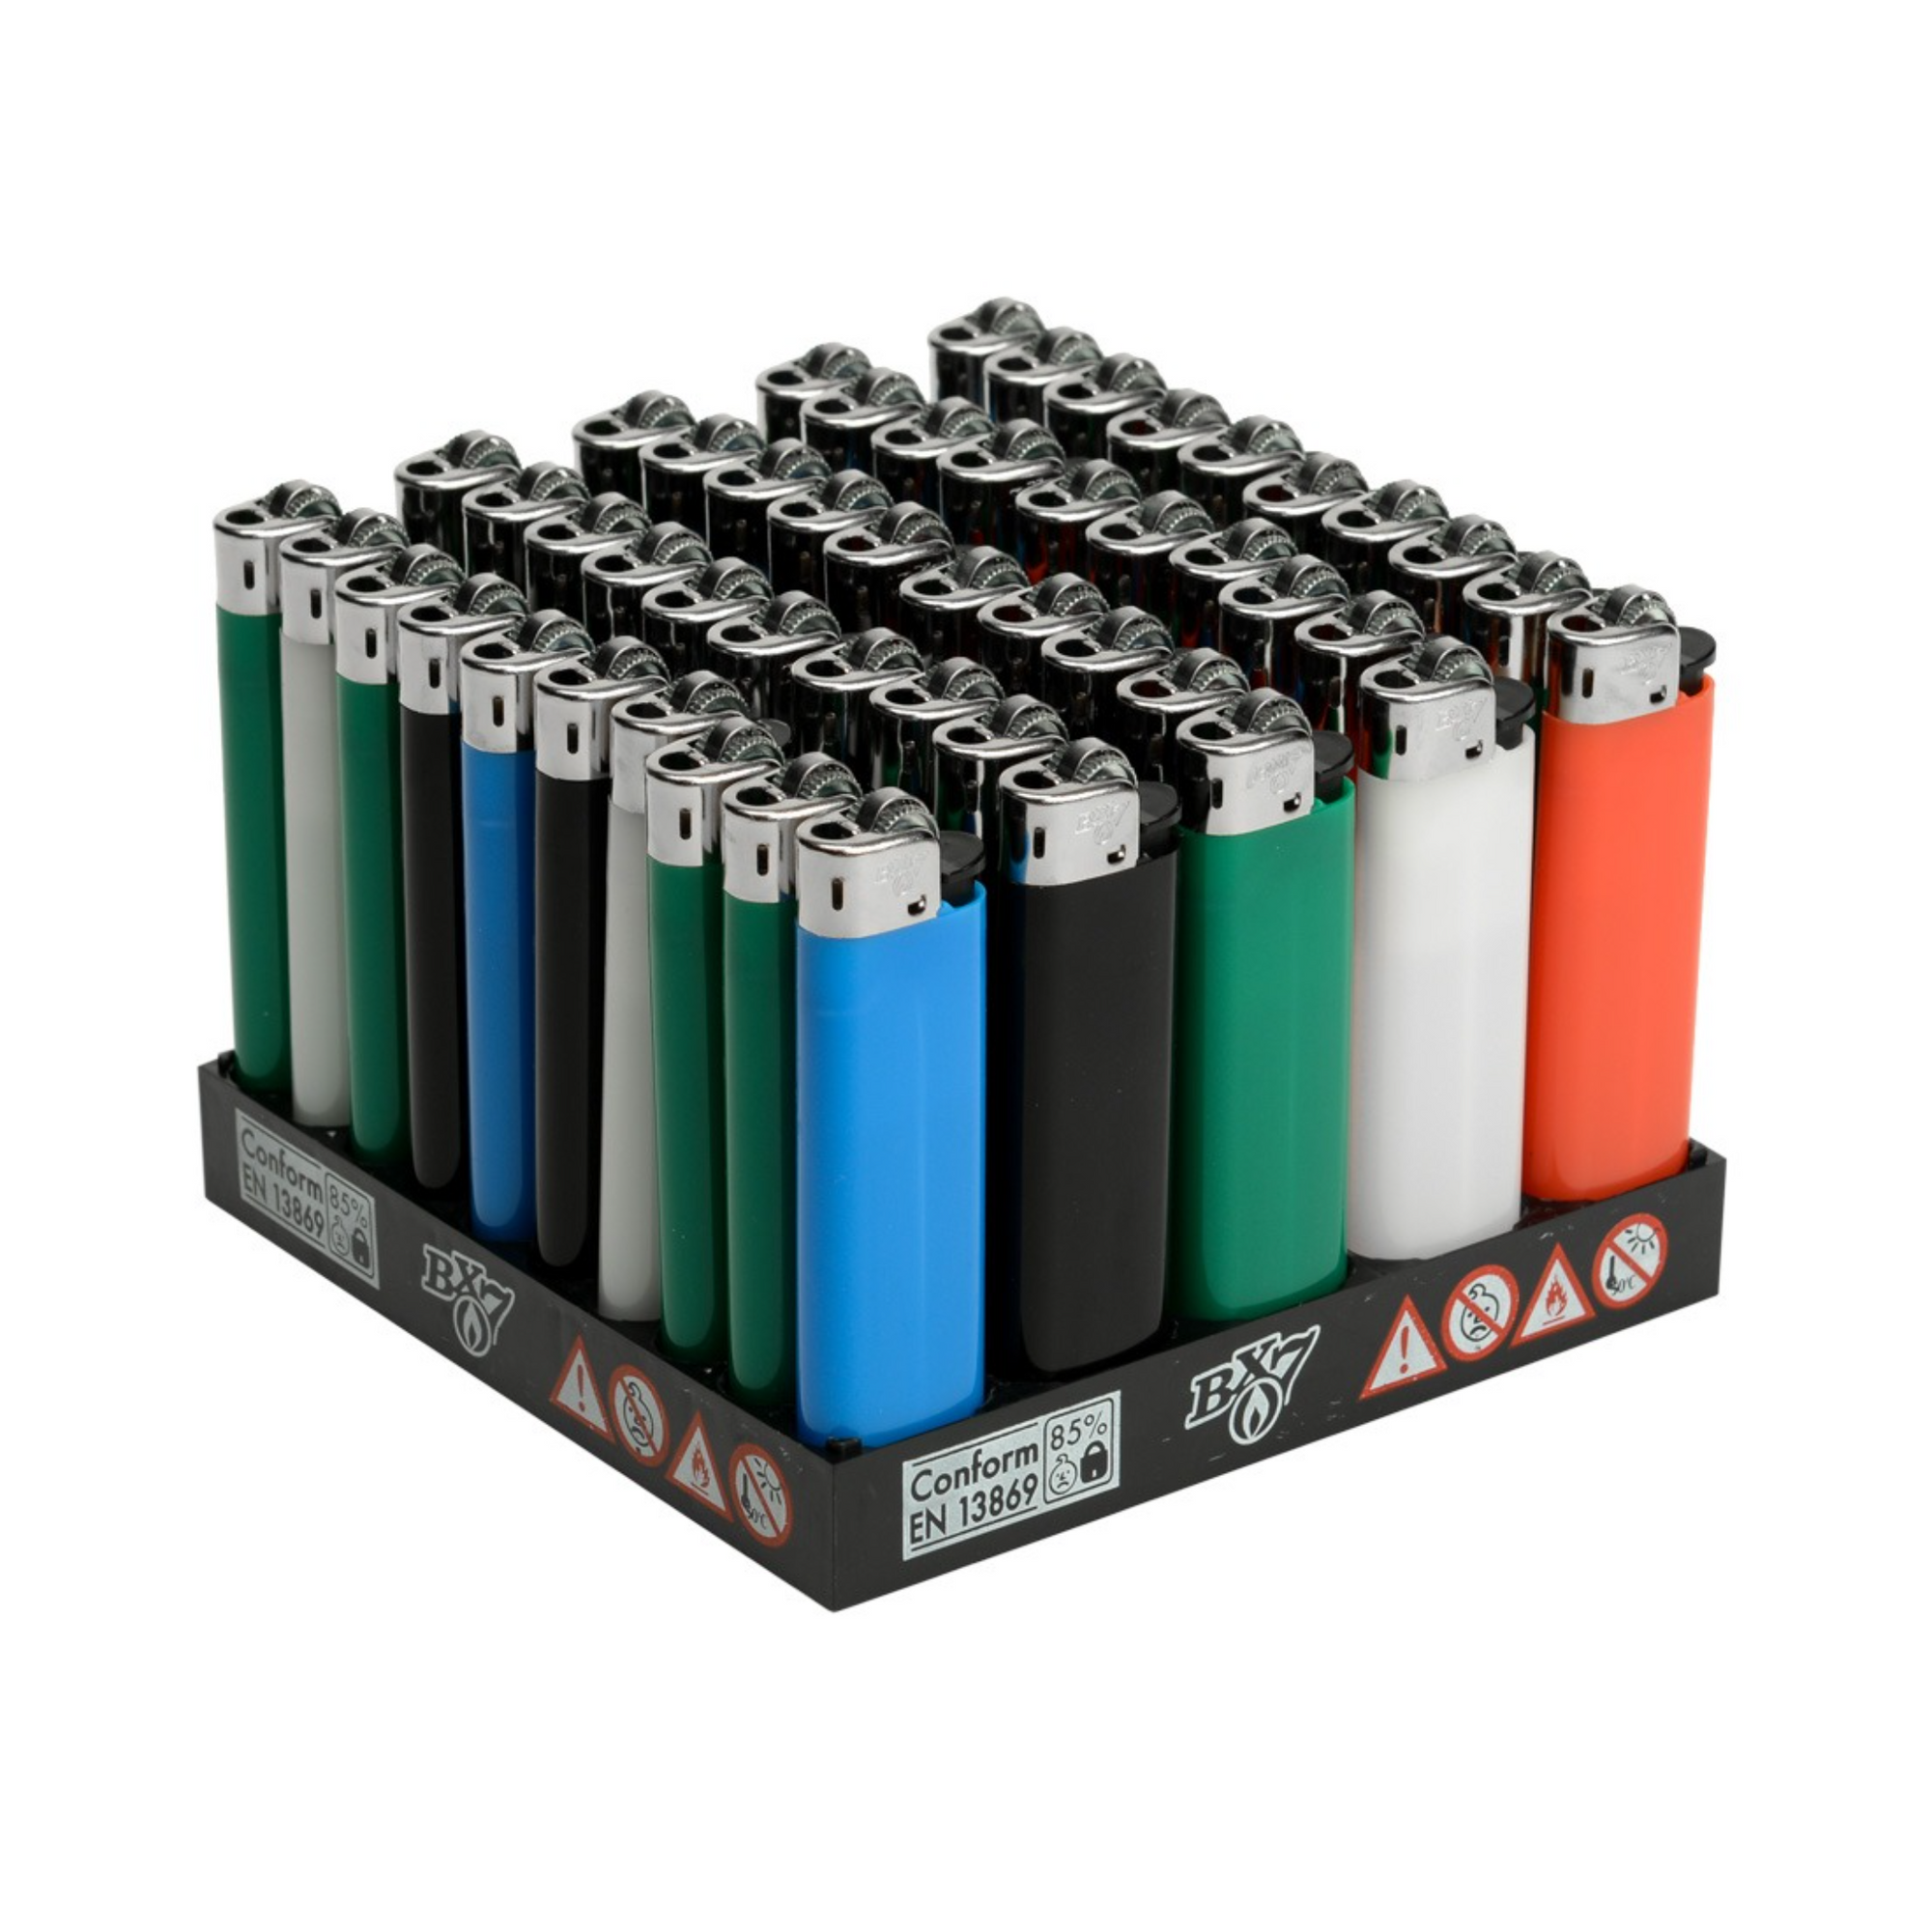 Atomic X50 Lighters